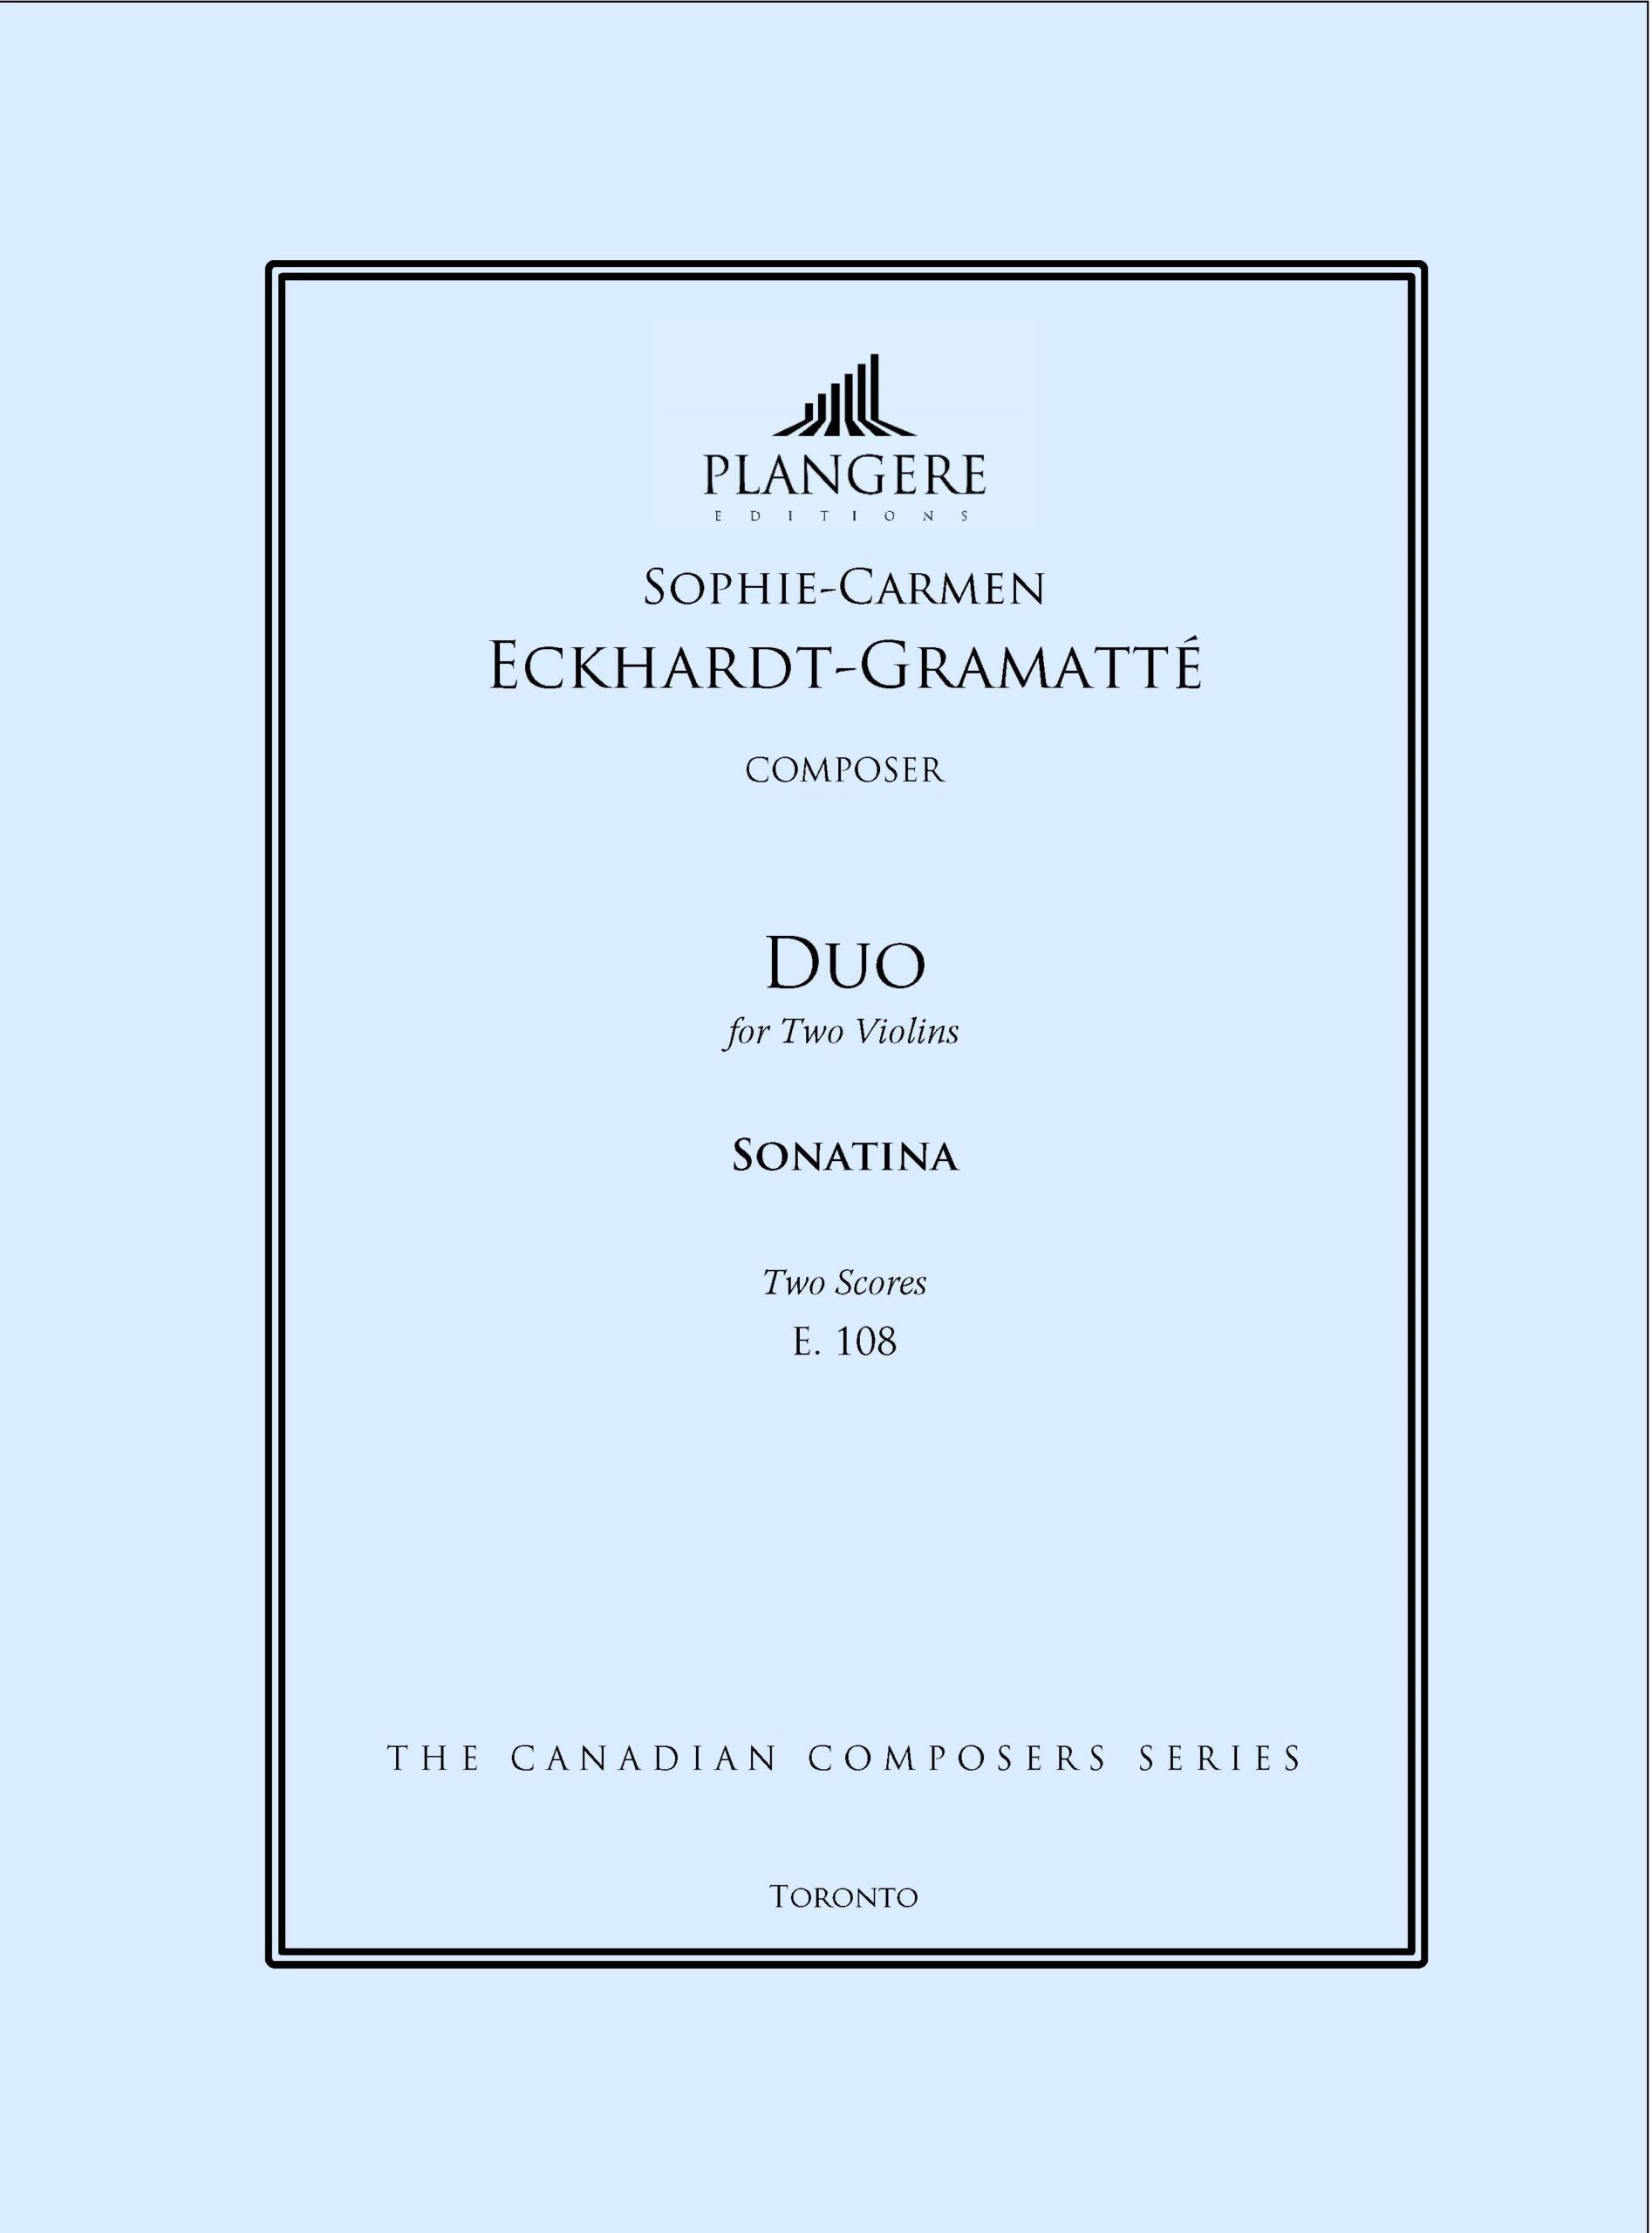 Eckhardt- Gramatté Duo for Two Violins (I) (Sonatine) E. 108 (2 scores)